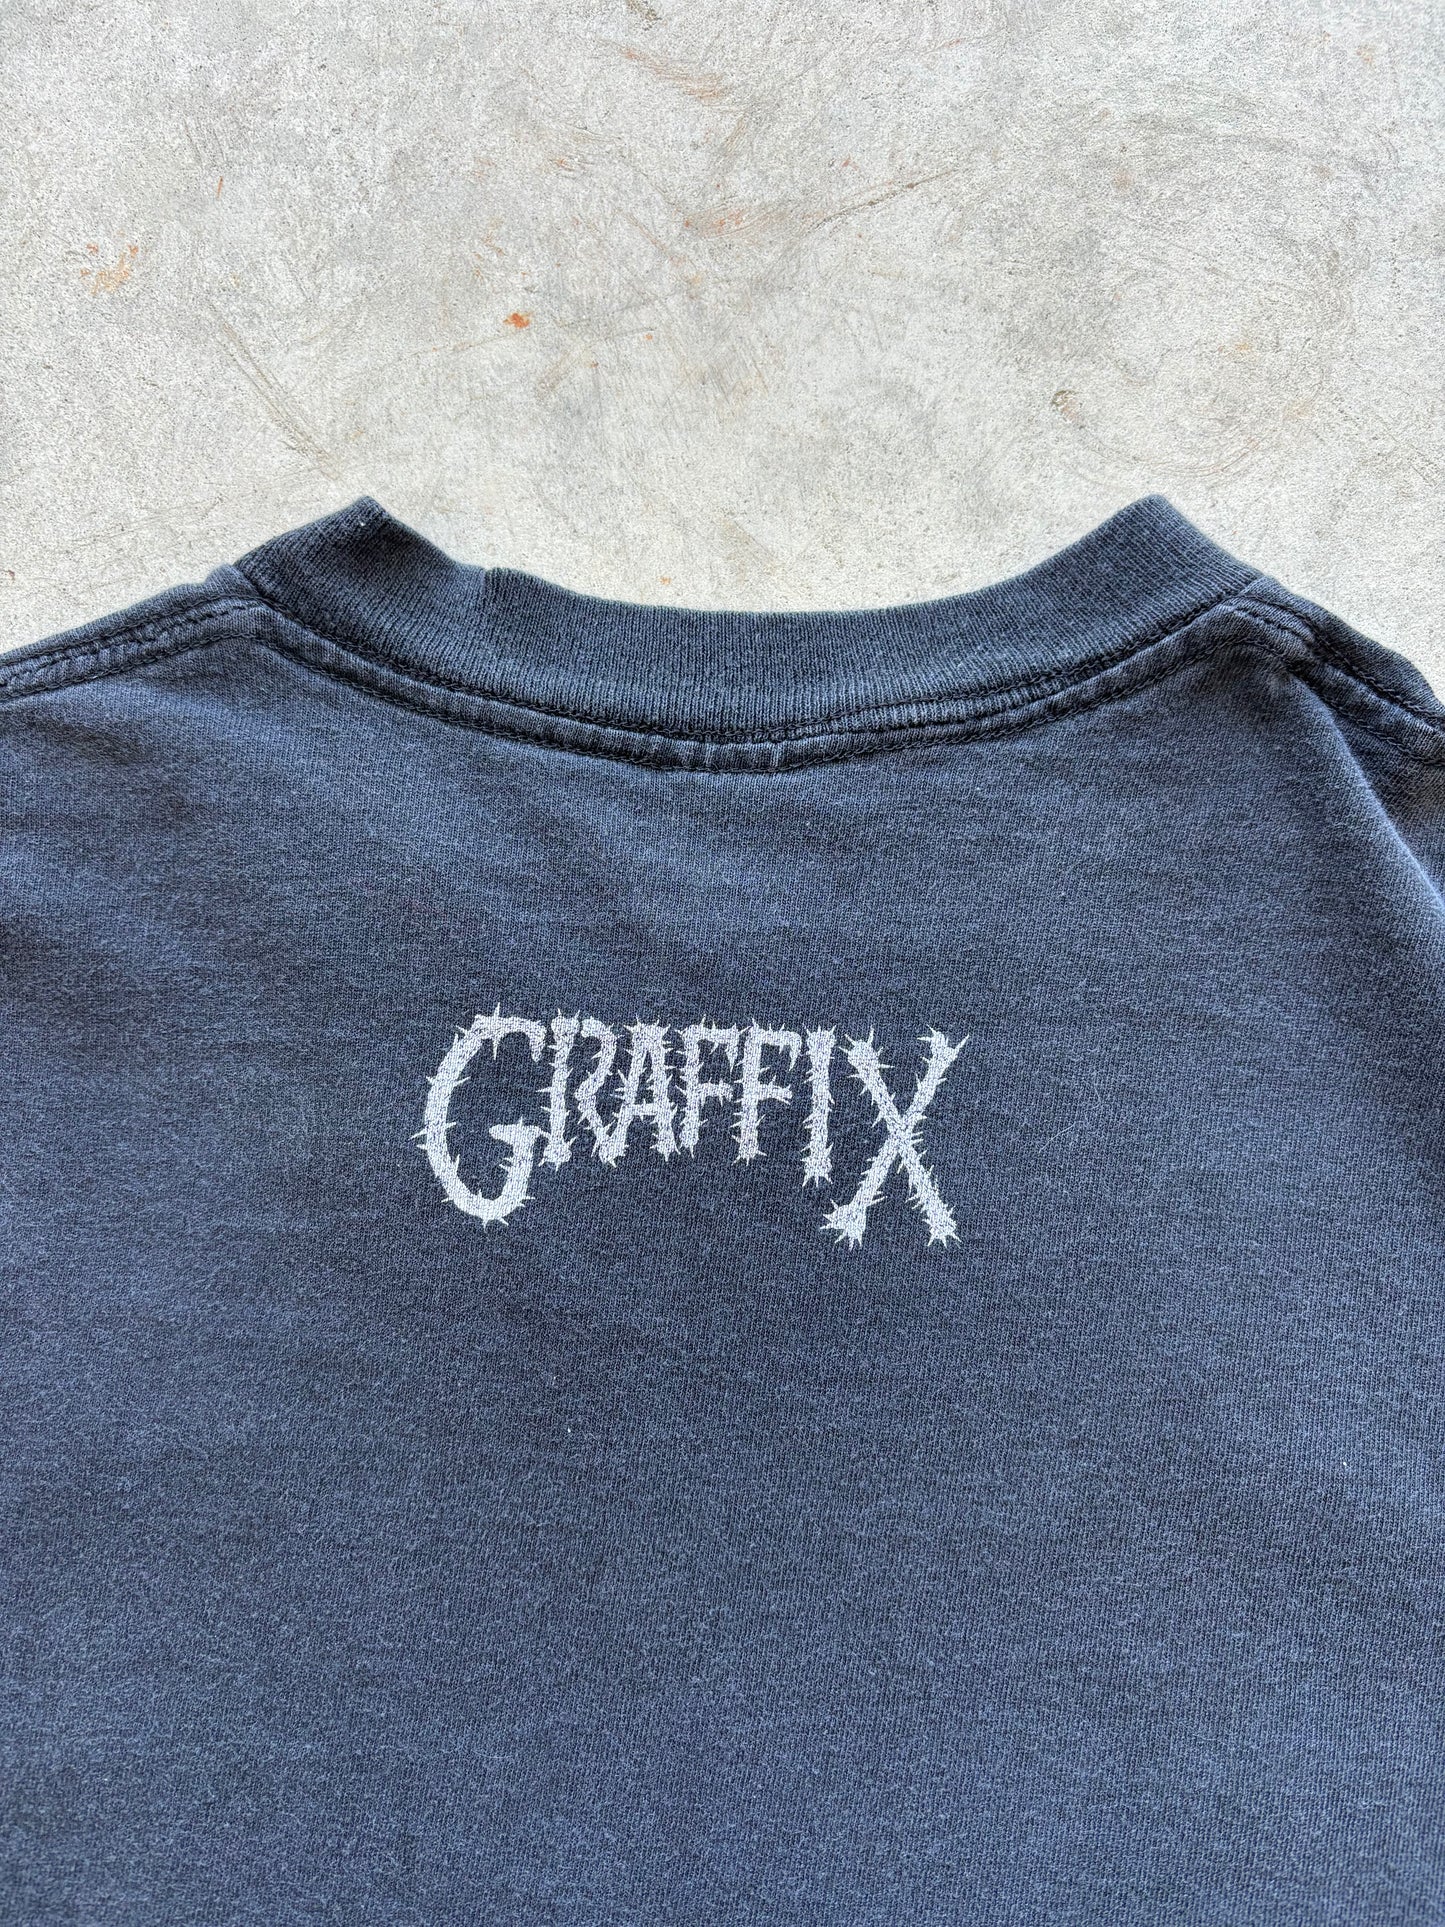 1990's Graffix Bong Company Tee Size XL